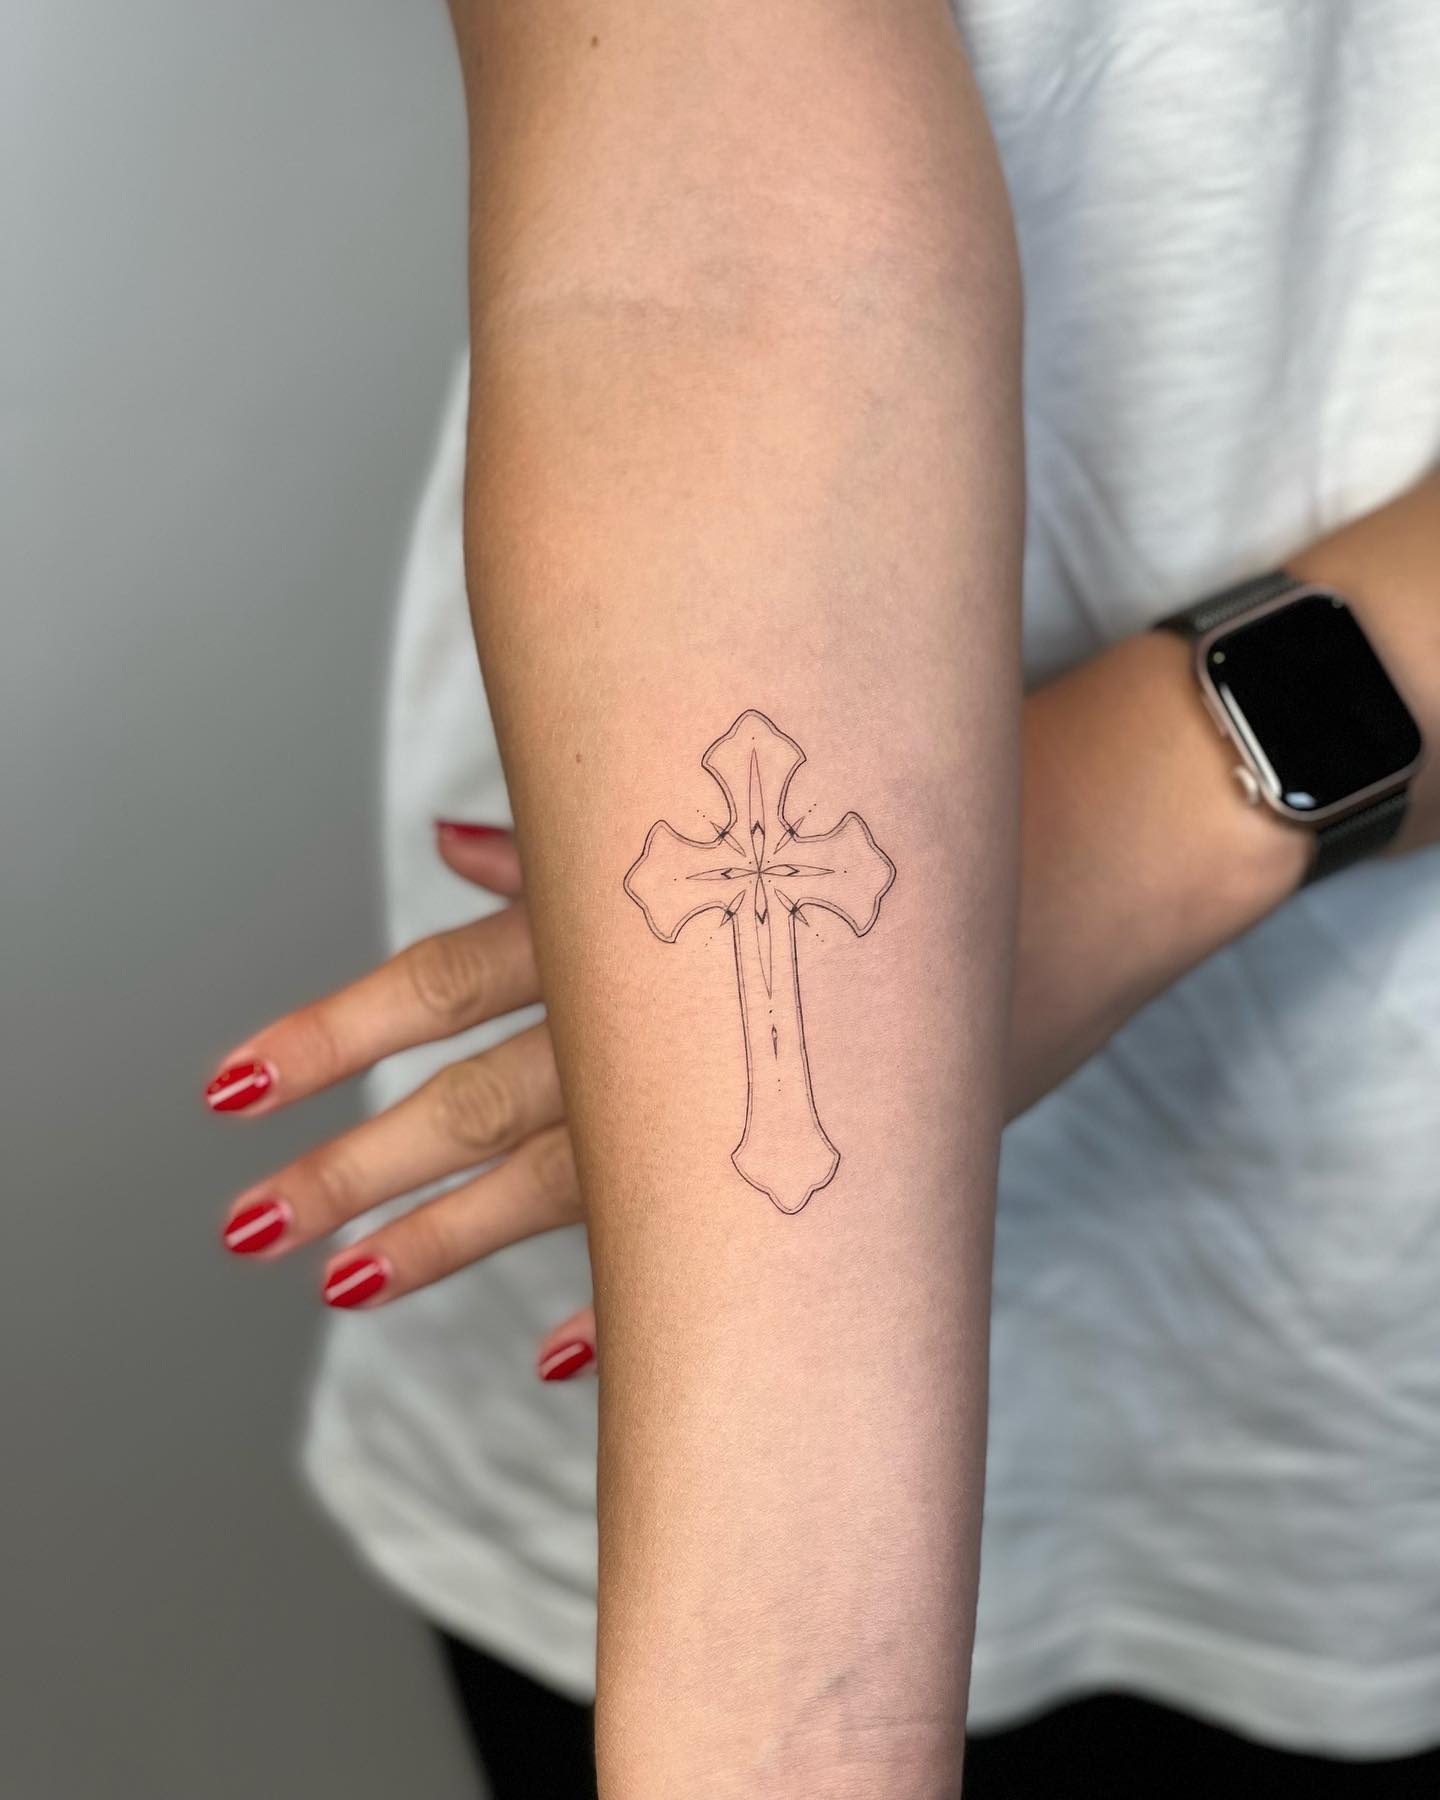 female christian tattoos